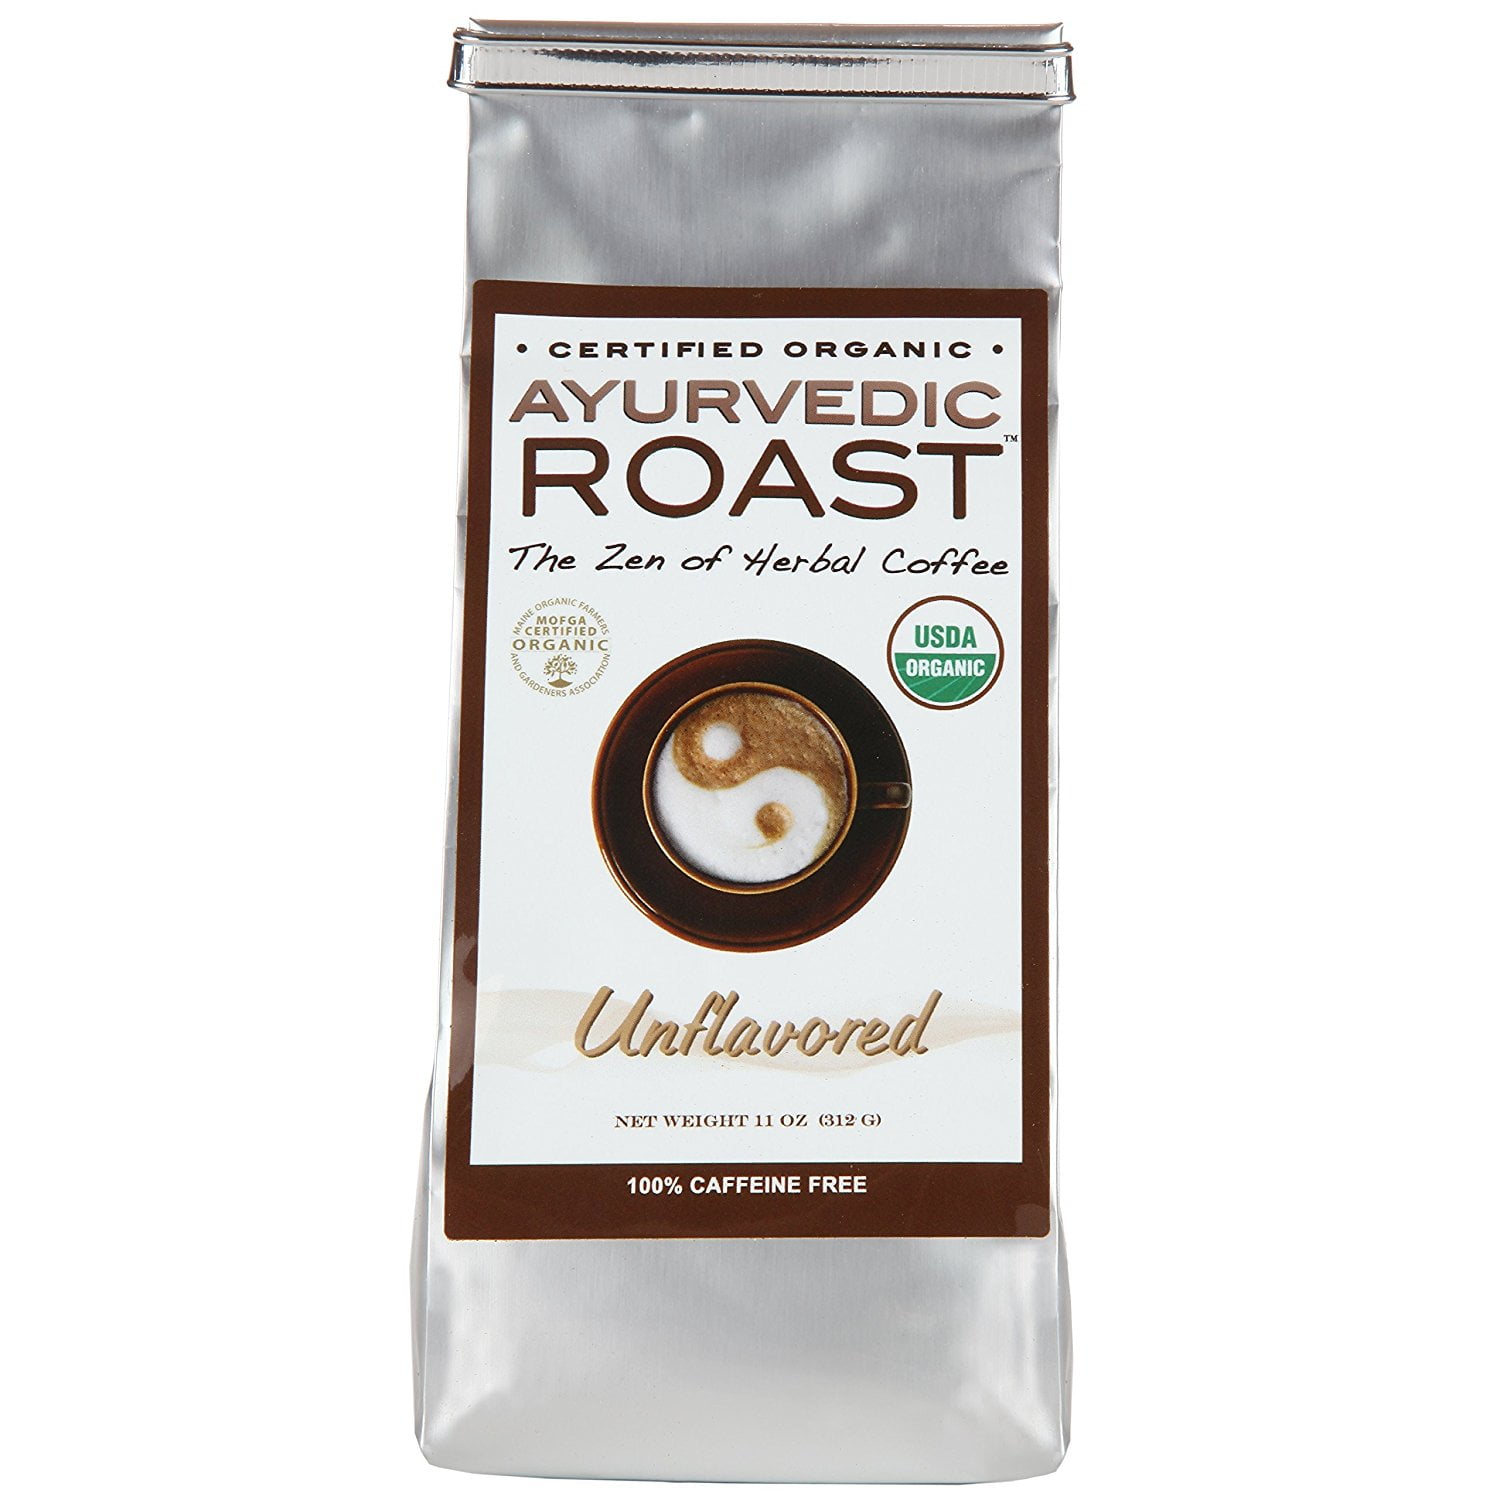 Blackout Coffee, Brewtal Awakening Dark Roast Coffee, High Caffeine Fresh Roasted in The USA – 12 oz Bag (Ground Coffee)